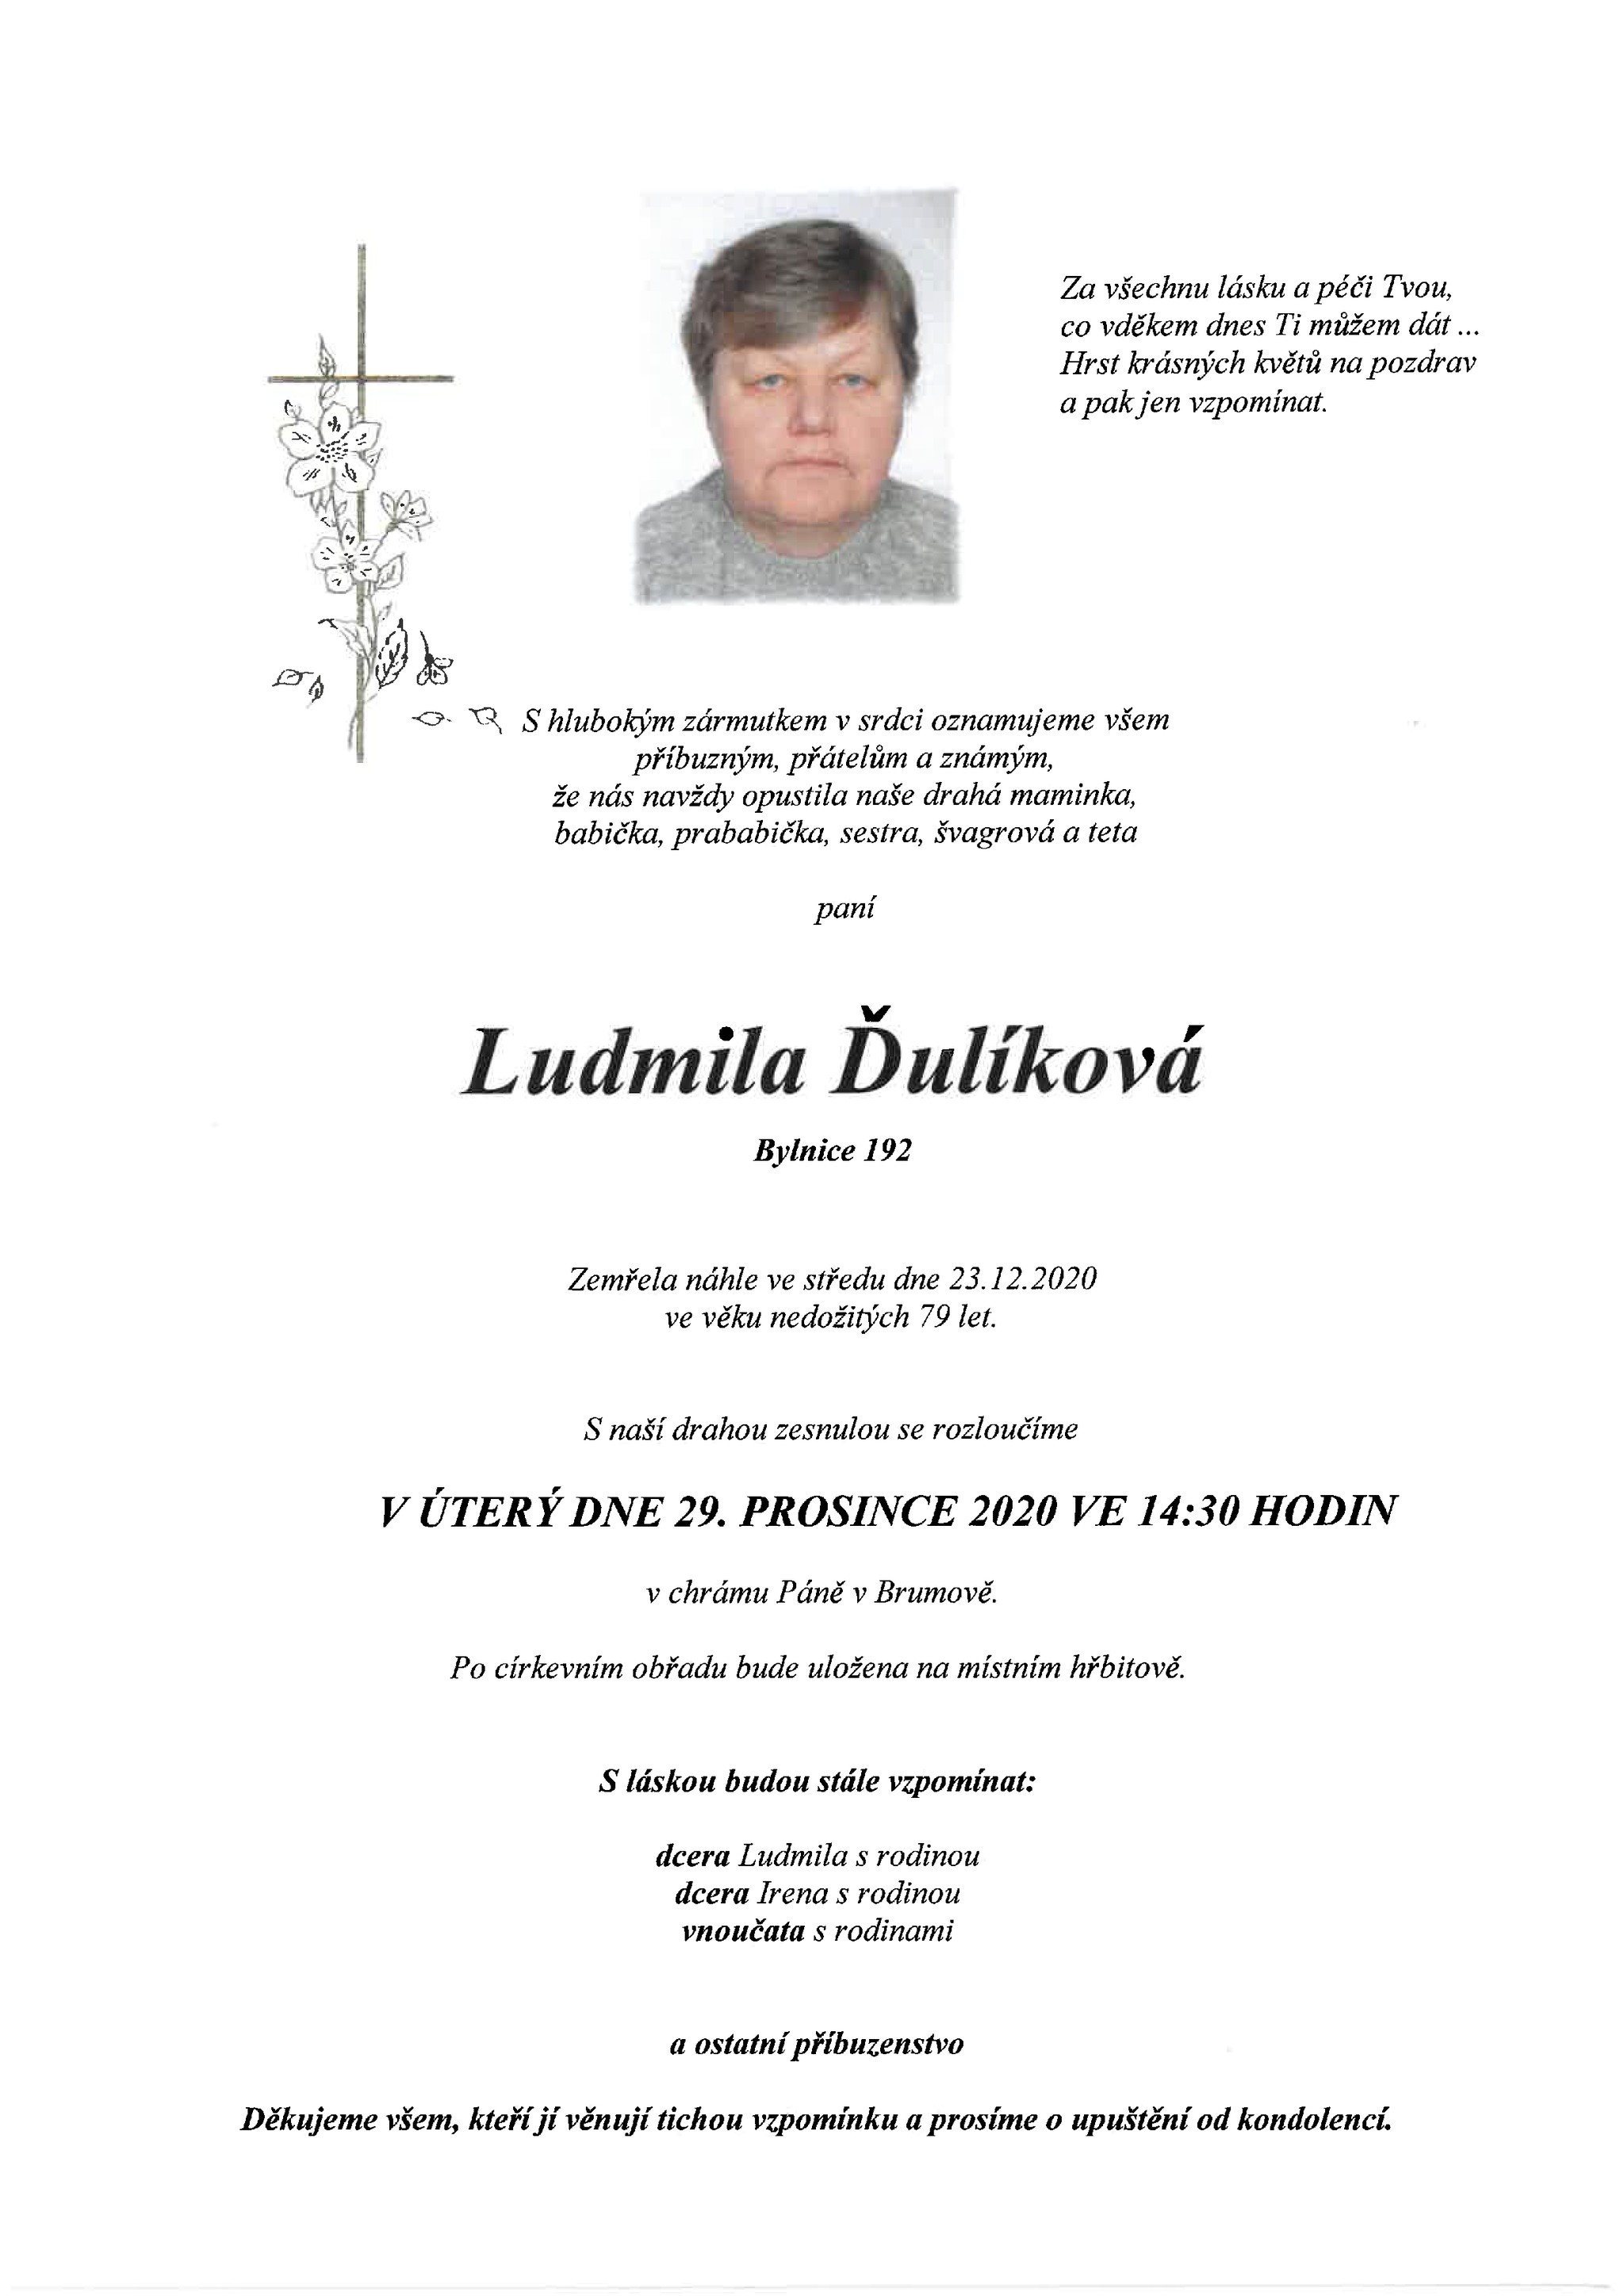 Ludmila Ďulíková